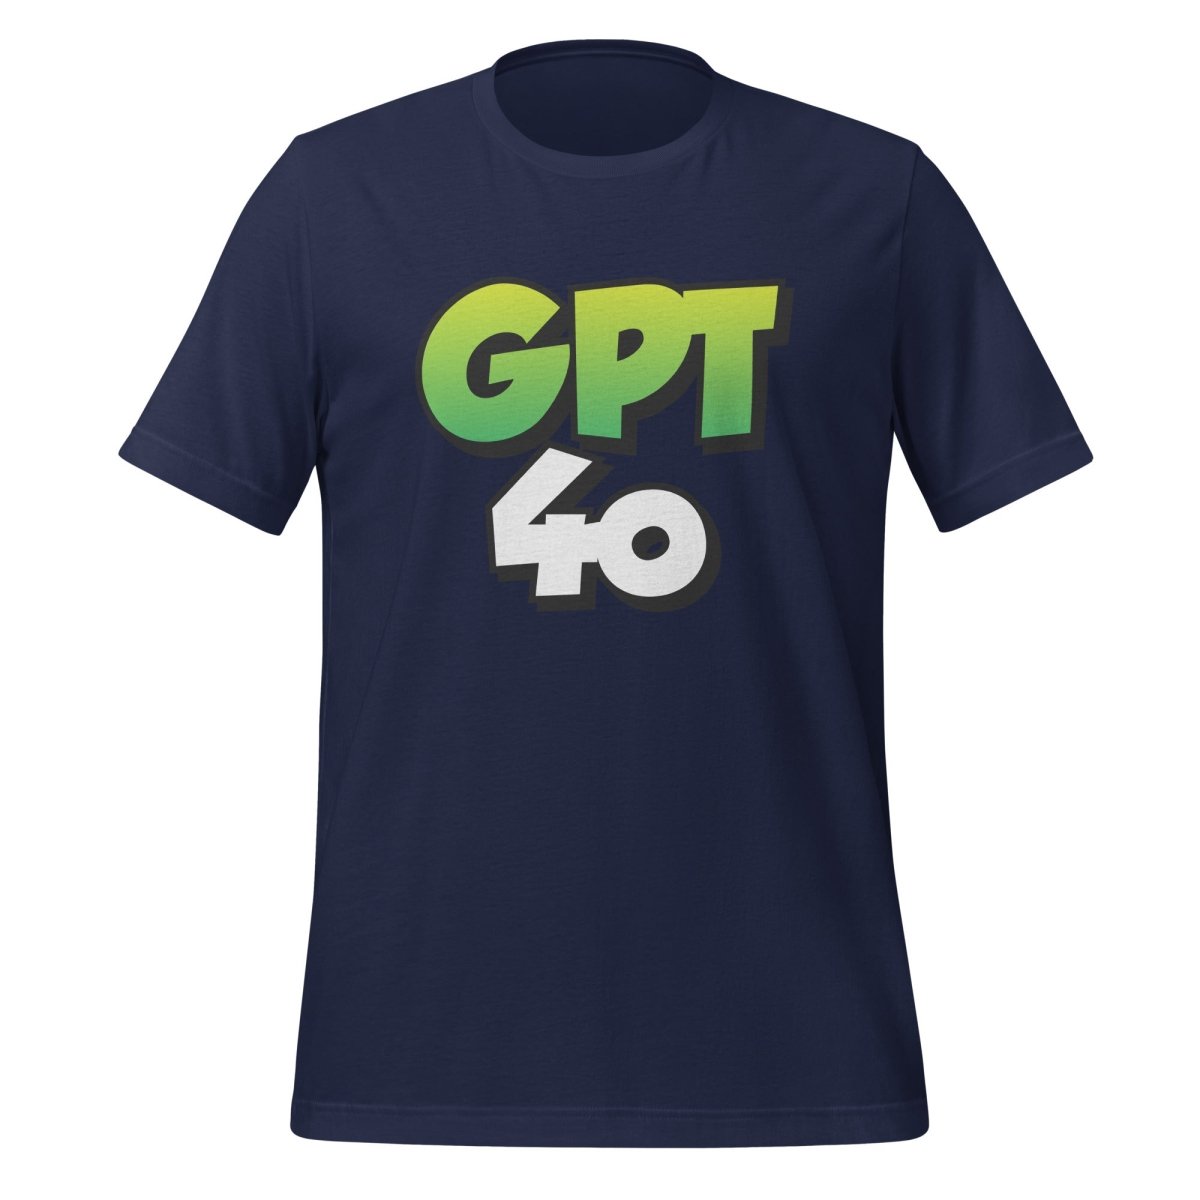 GPT 4o Ben 10 - Style T - Shirt (unisex) - Navy - AI Store